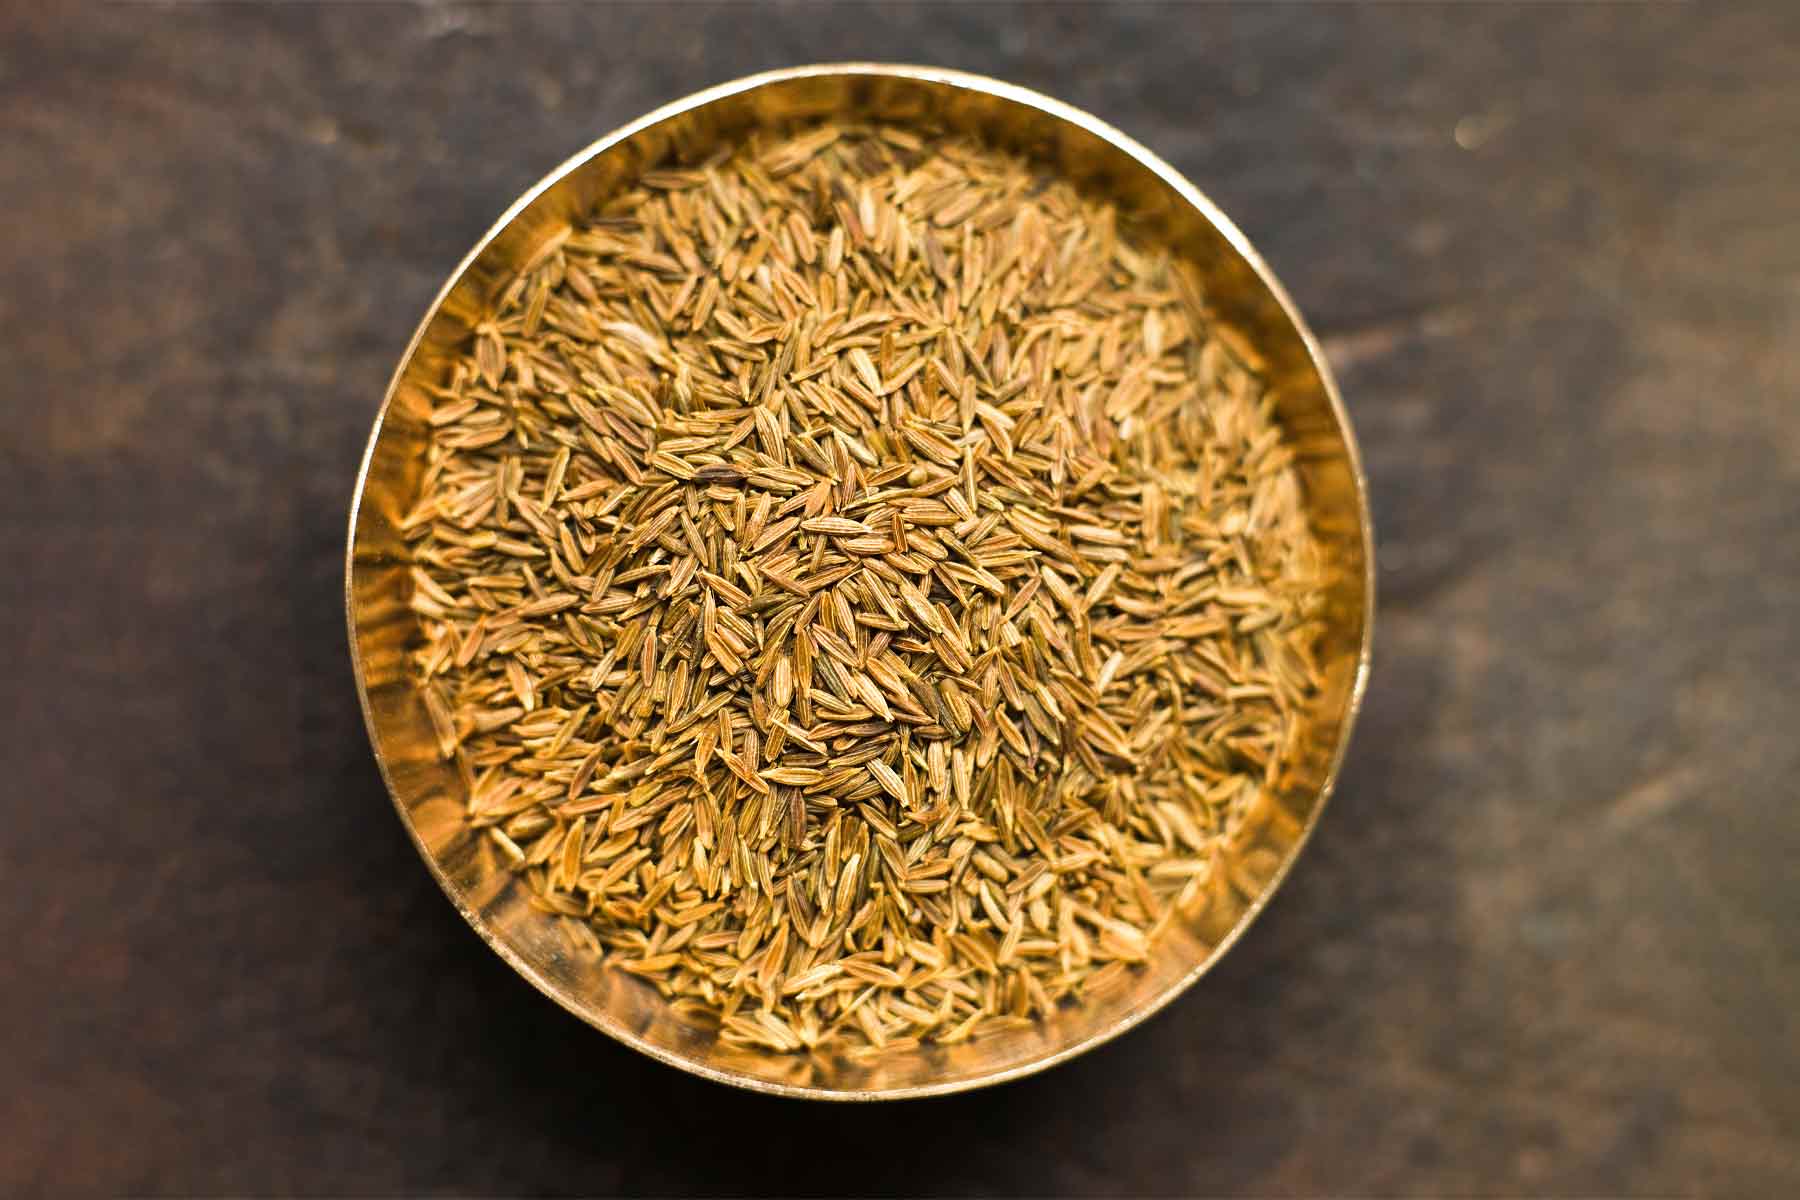 A bowl of cumin seeds.